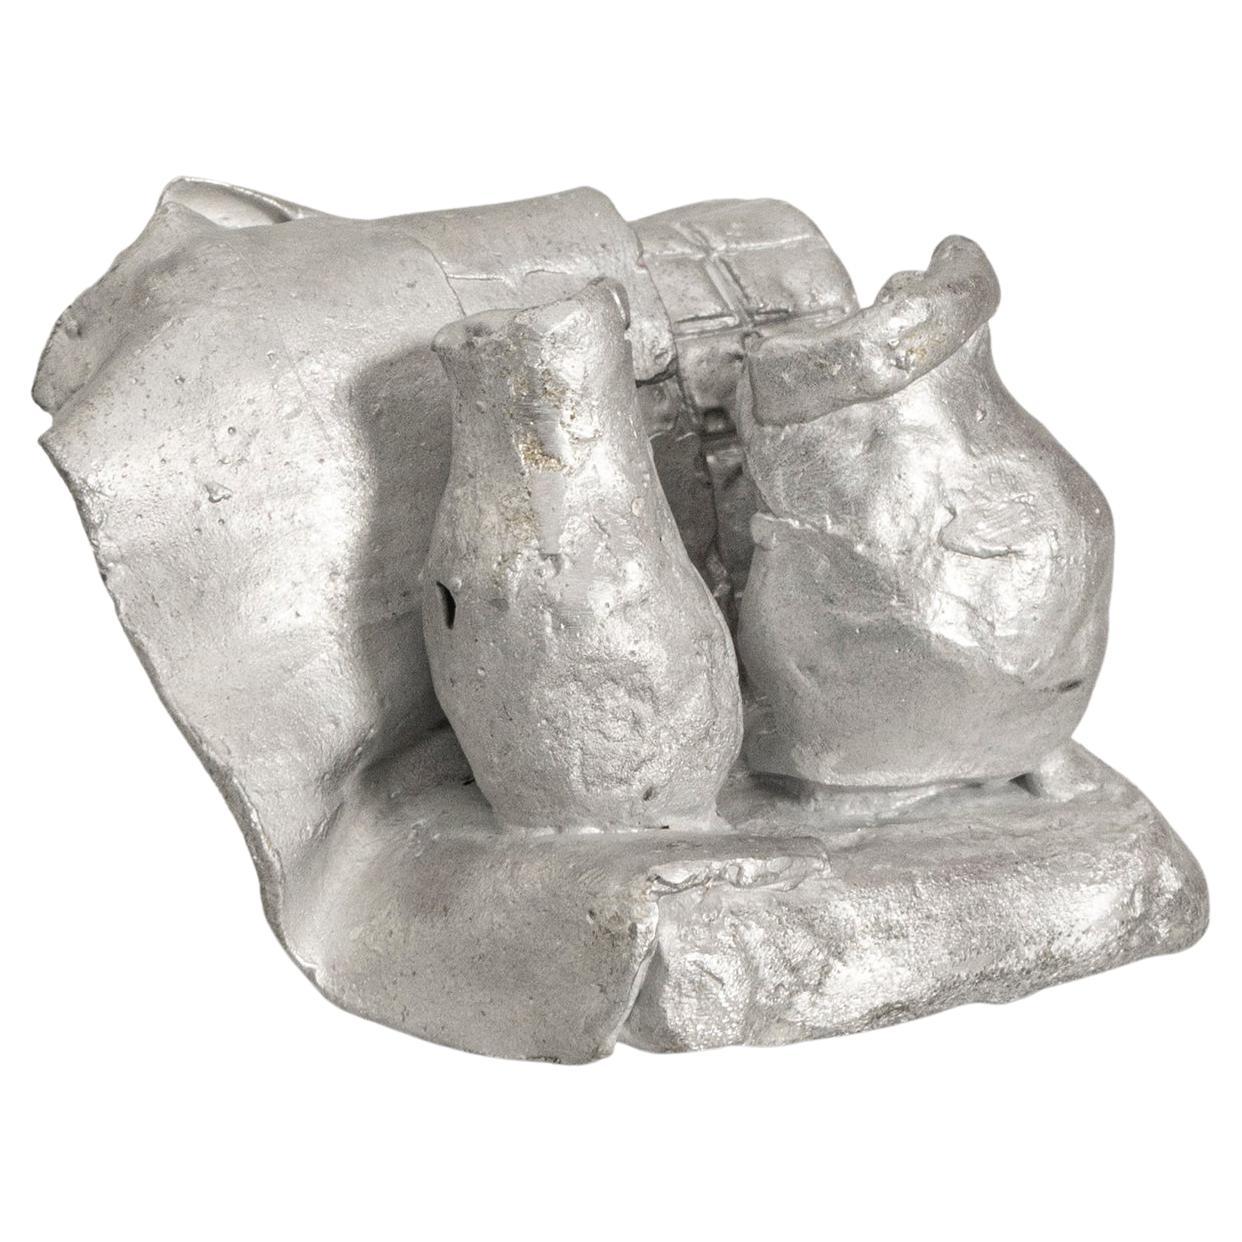 Handmade Aluminium cast standing sculpture depicting "The Broken Jar" For Sale